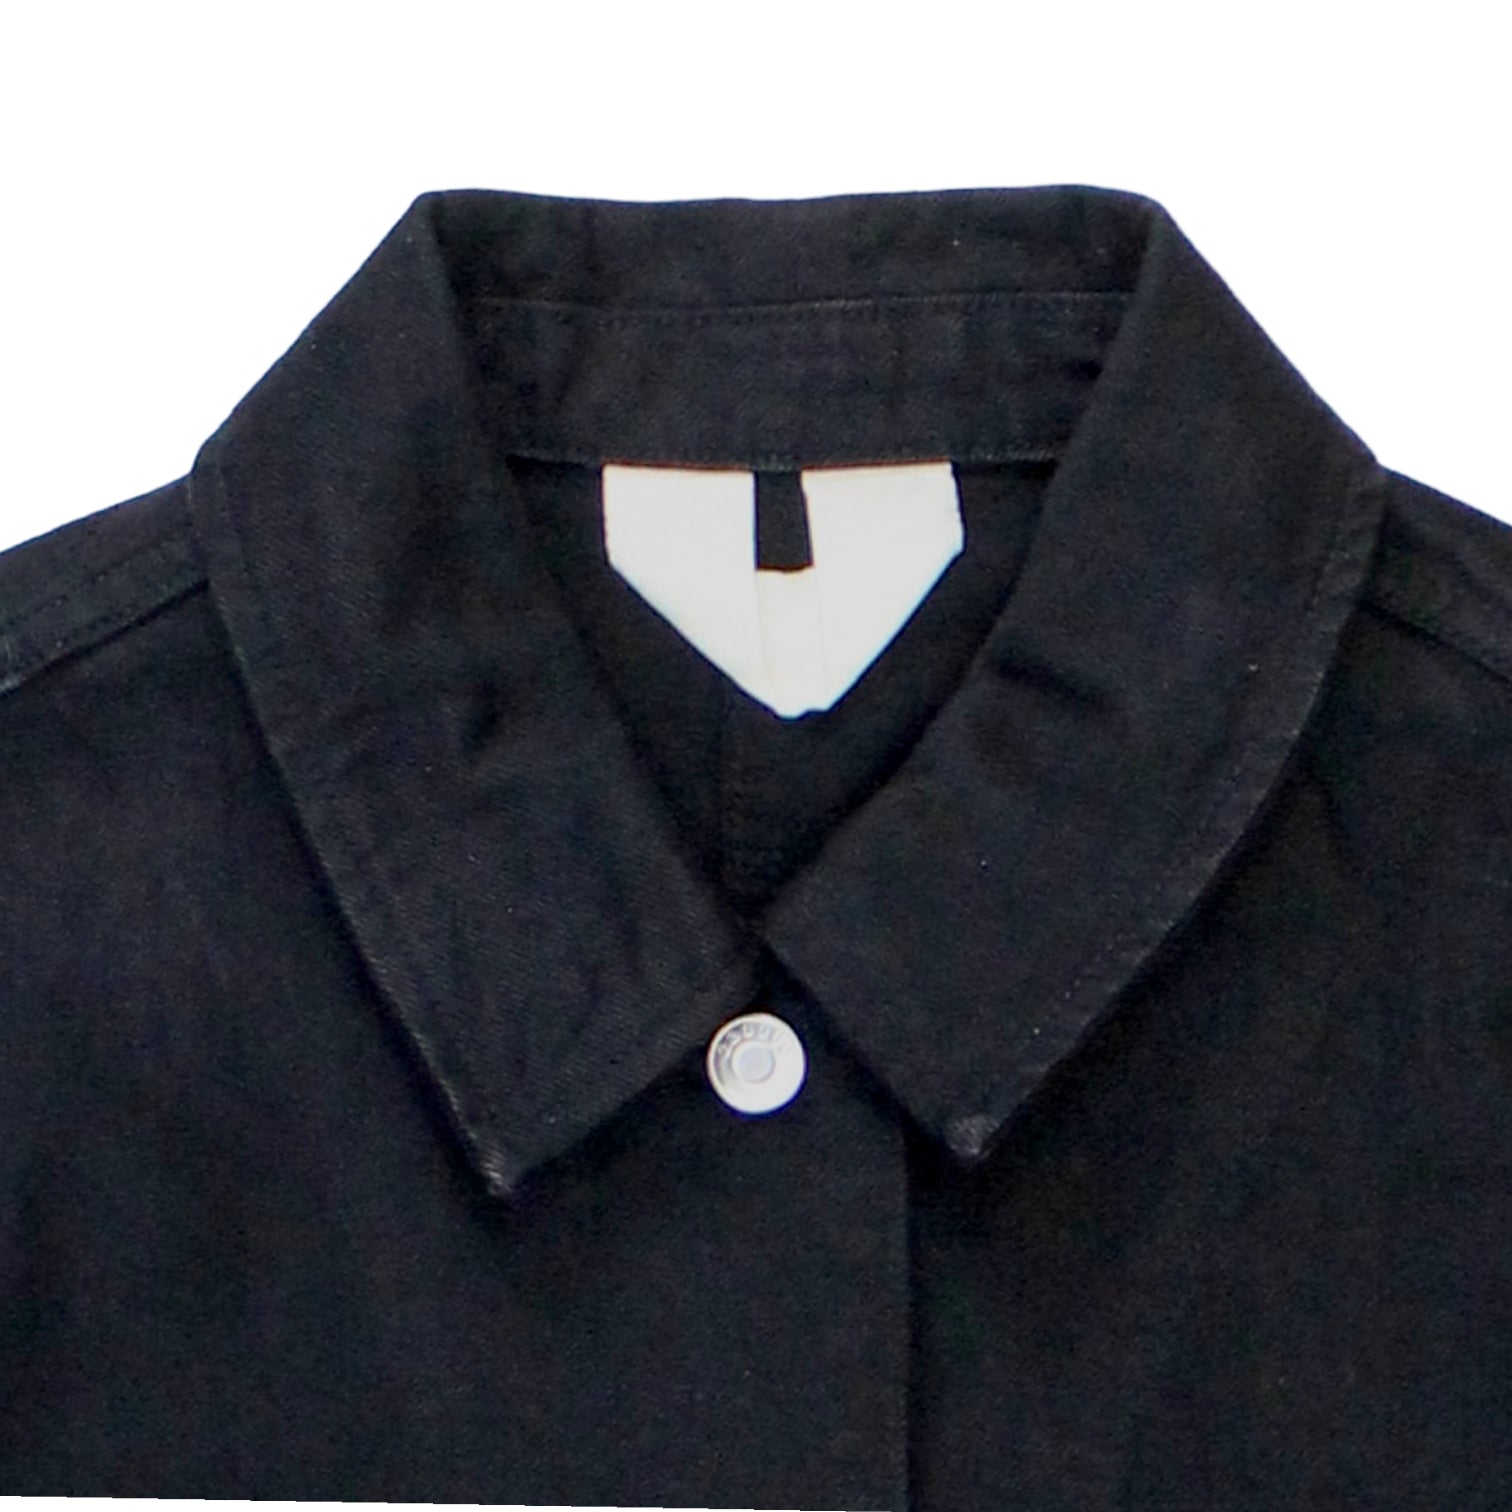 Arket Soft Black Organic Twill Work Style Jacket